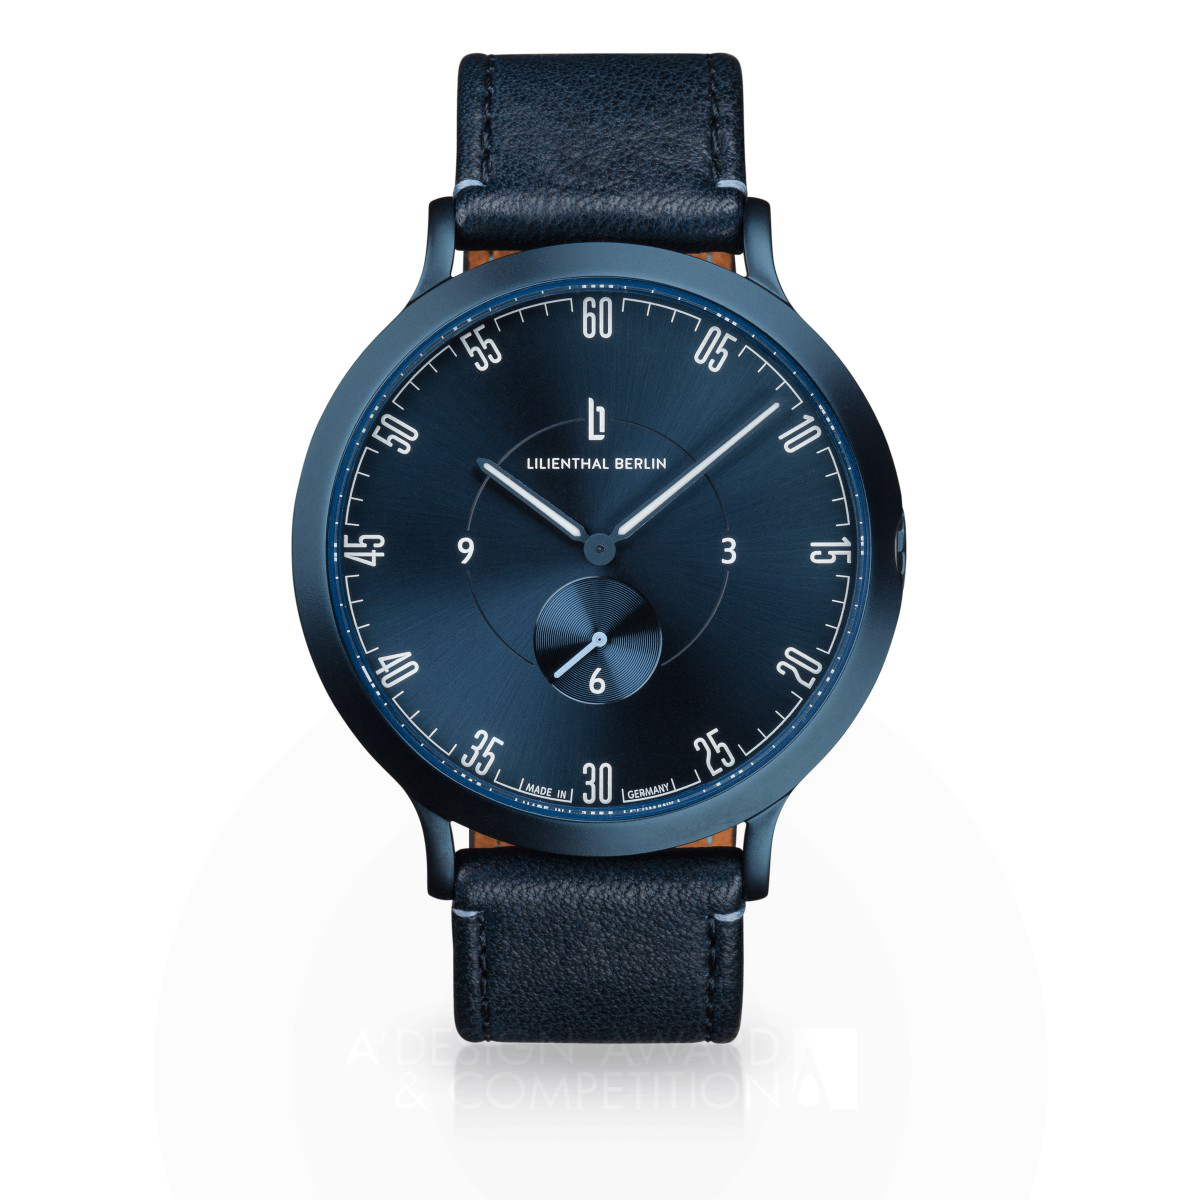 L1 All Blue Watch by Lars Hofmann Platinum Jewelry Design Award Winner 2020 